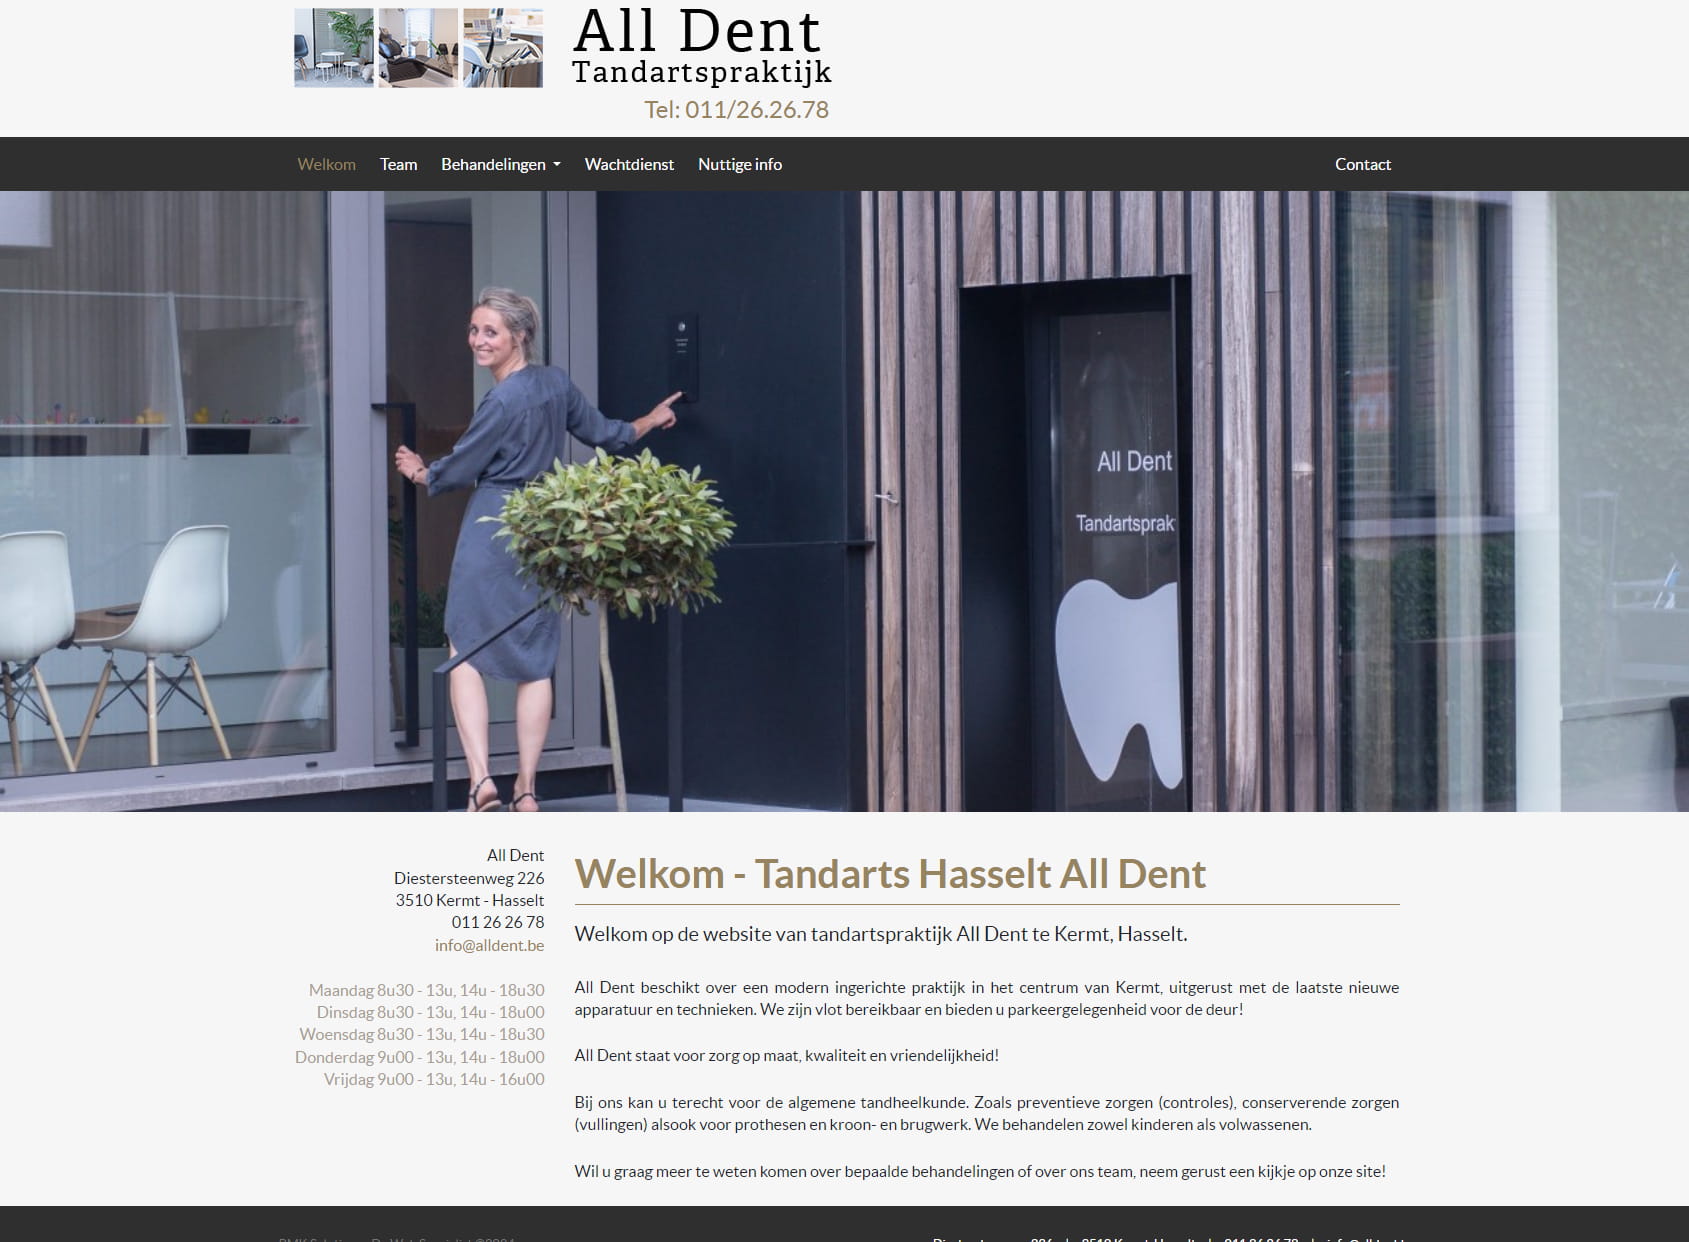 All Dent Tandartspraktijk, Nathalie Knoors